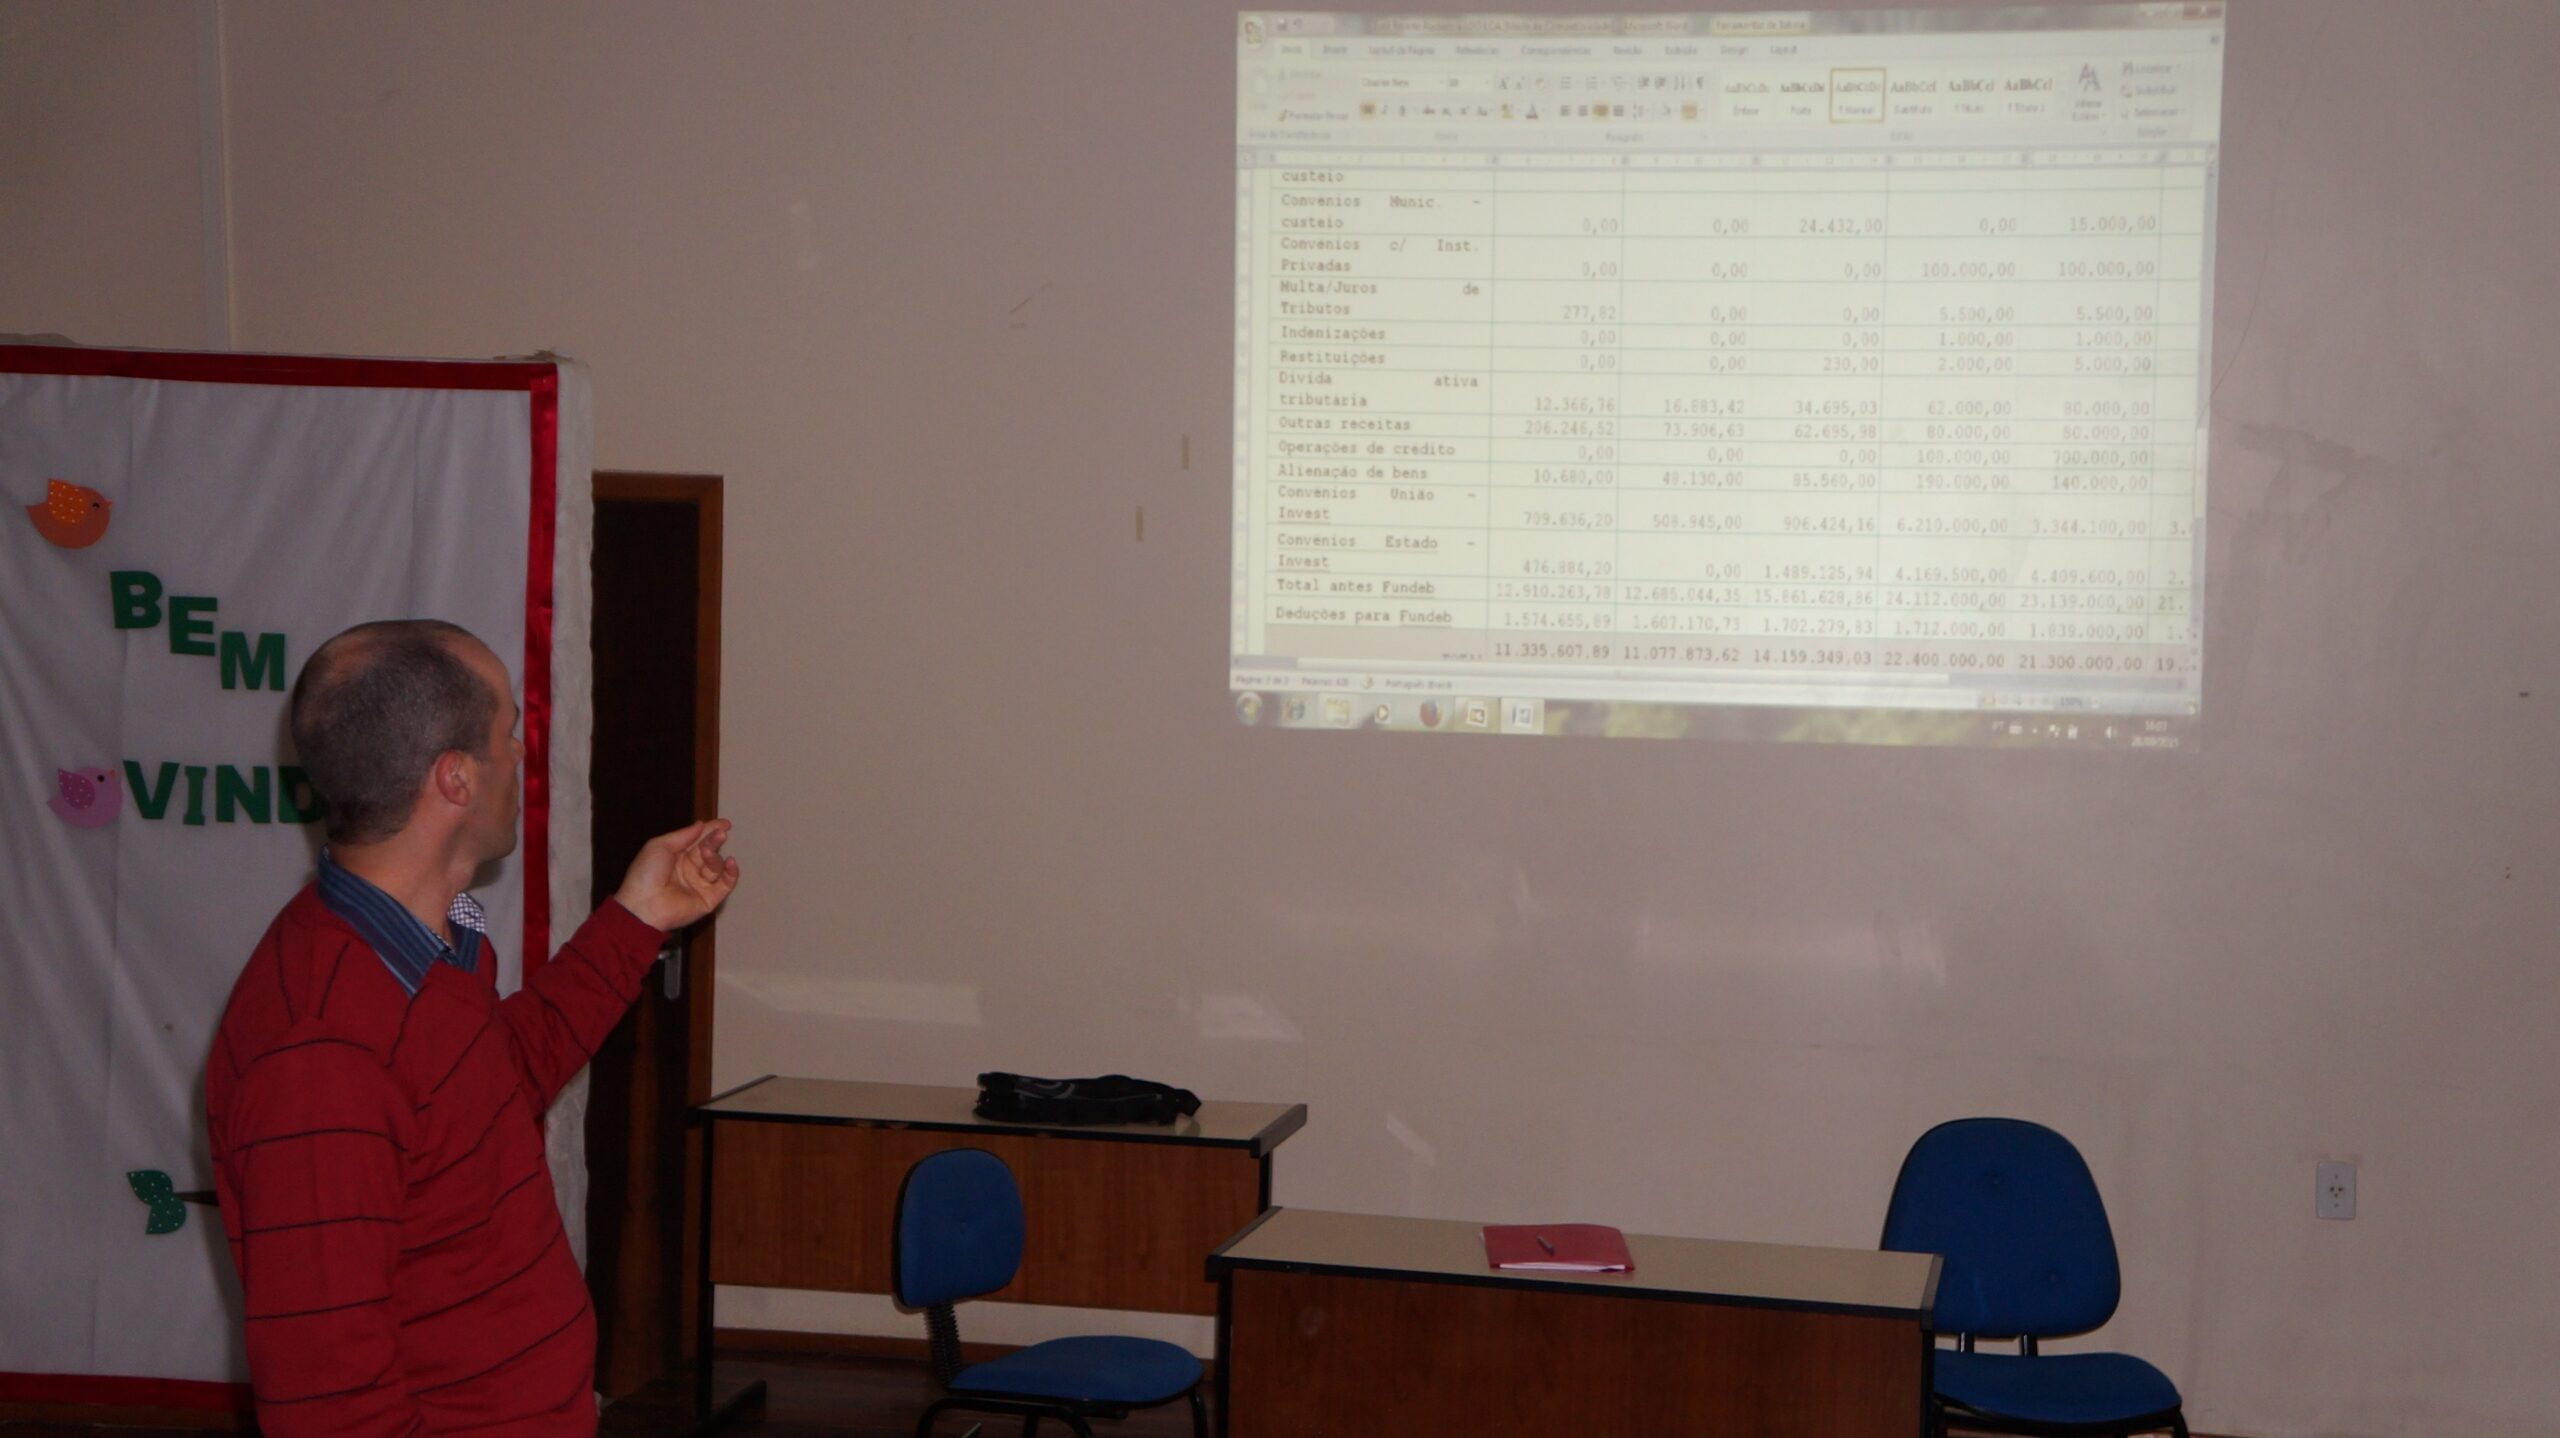 Contador do município apontando os dados para 2016